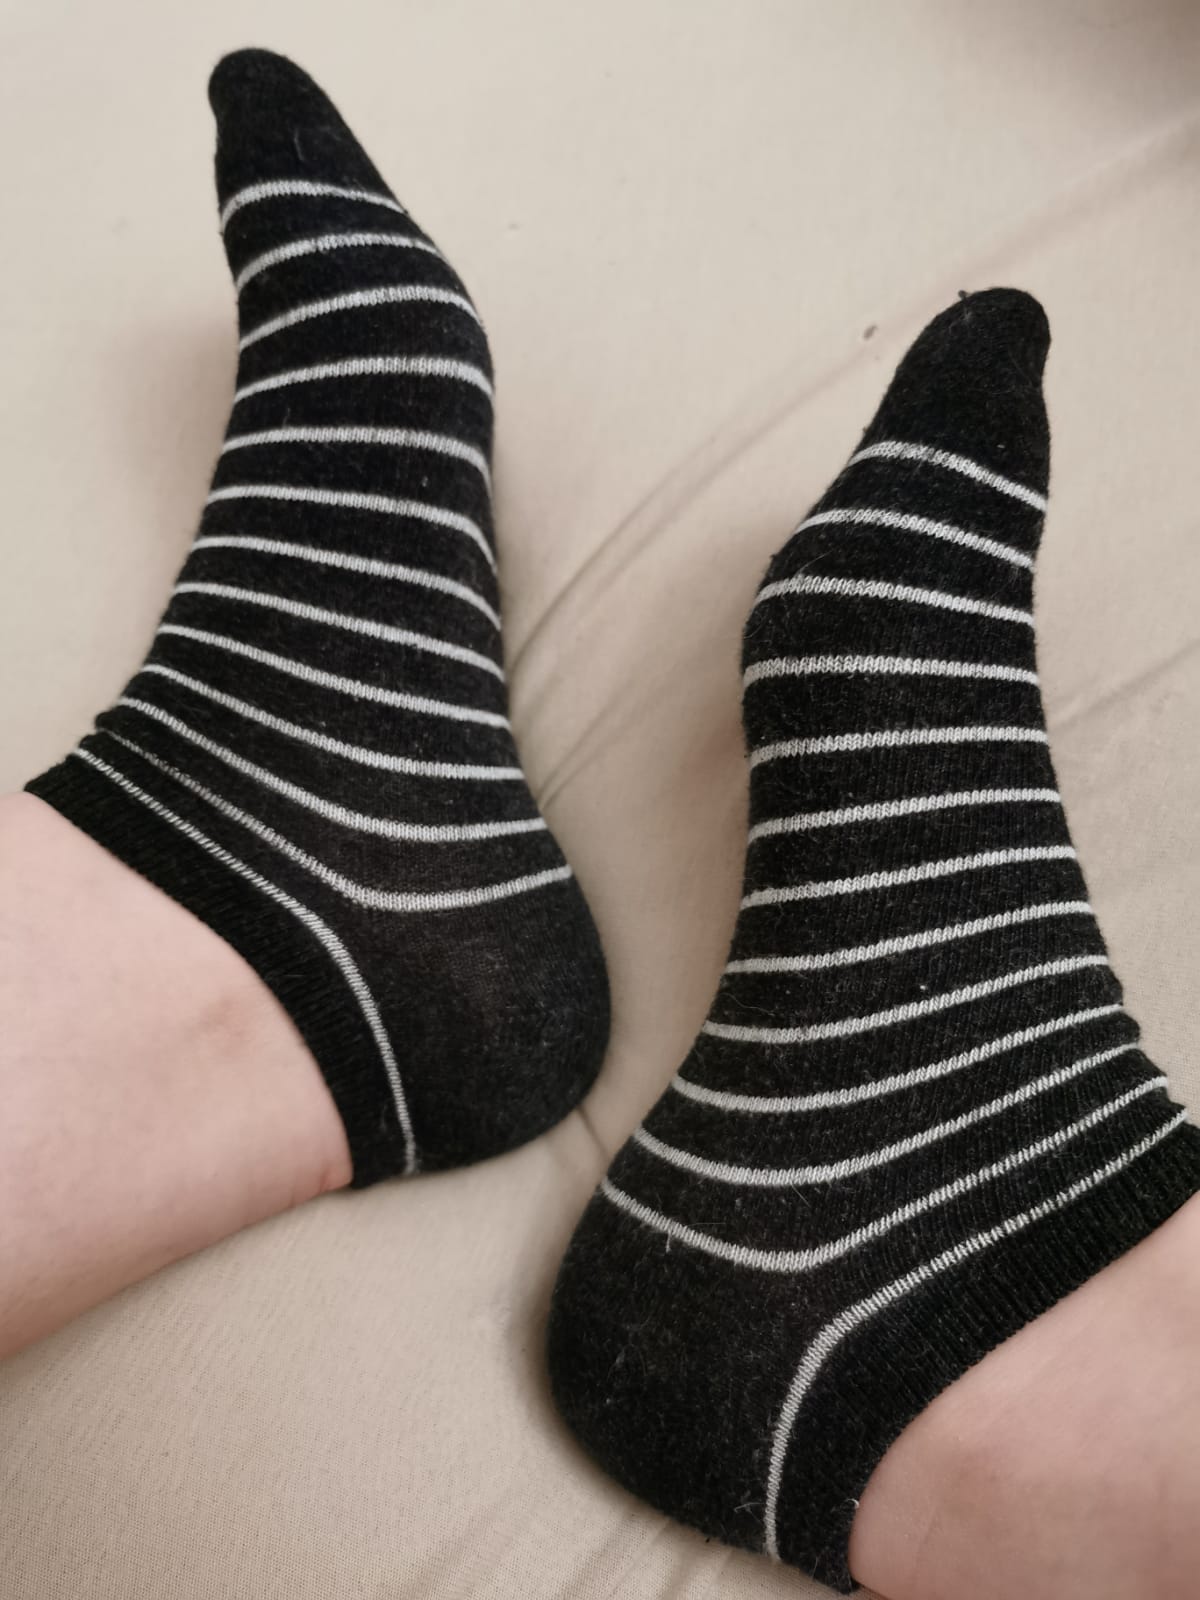 Socks test